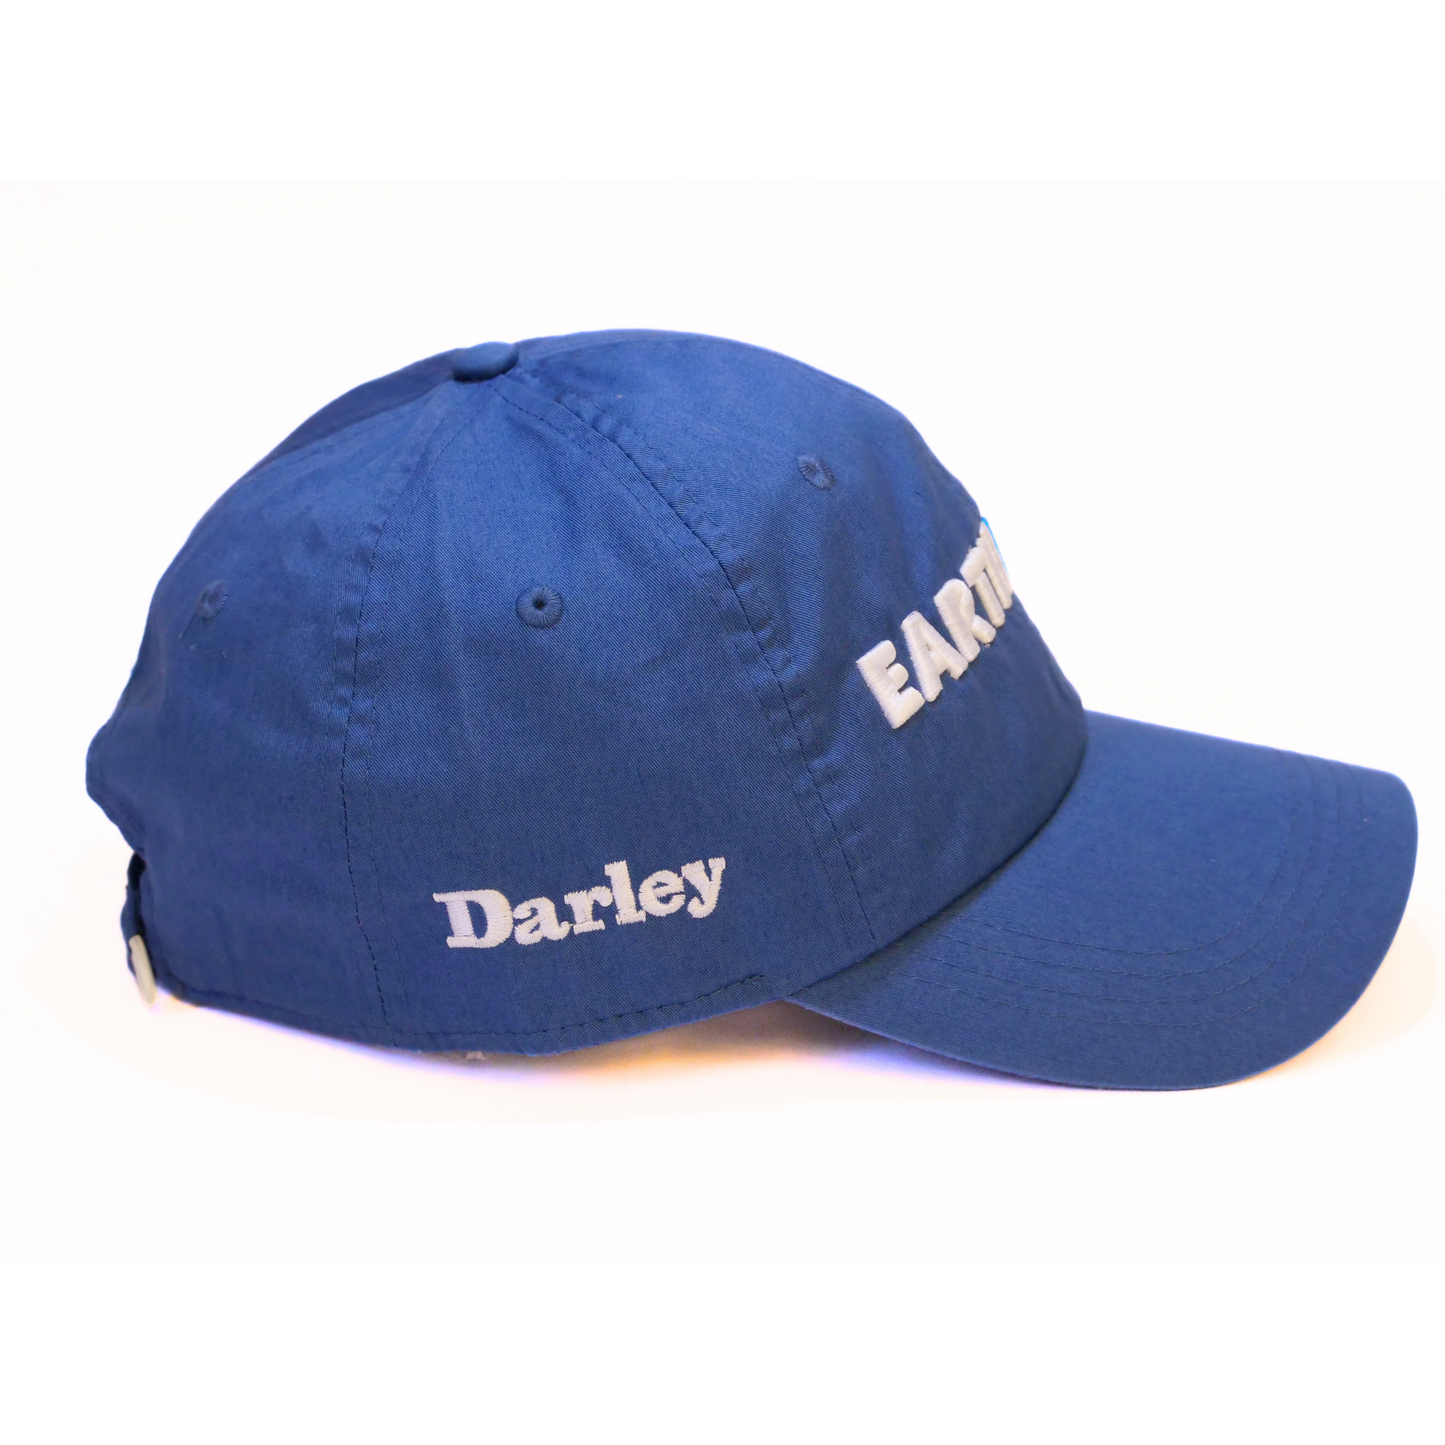 Earthlight Baseball Cap - Darley